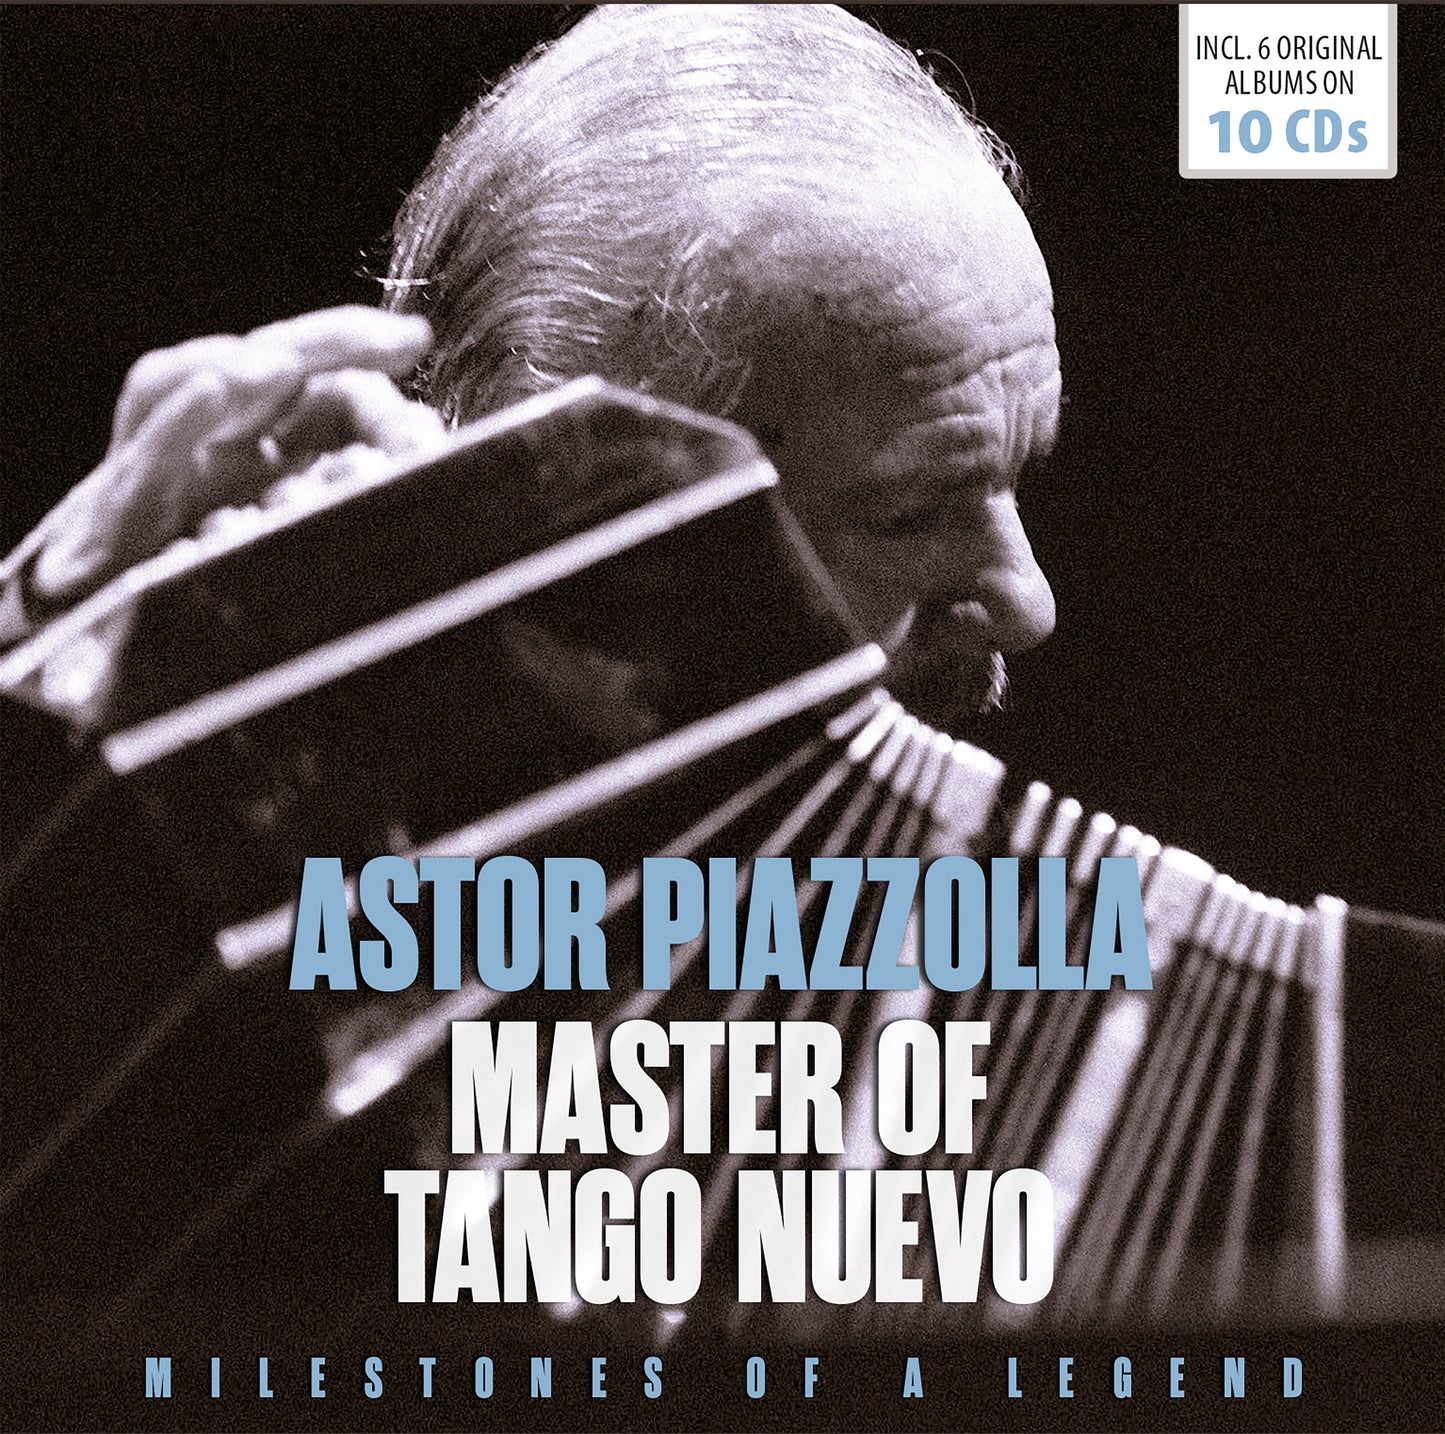 Astor Piazzolla: Master of Tango Nuevo (10 CDs)